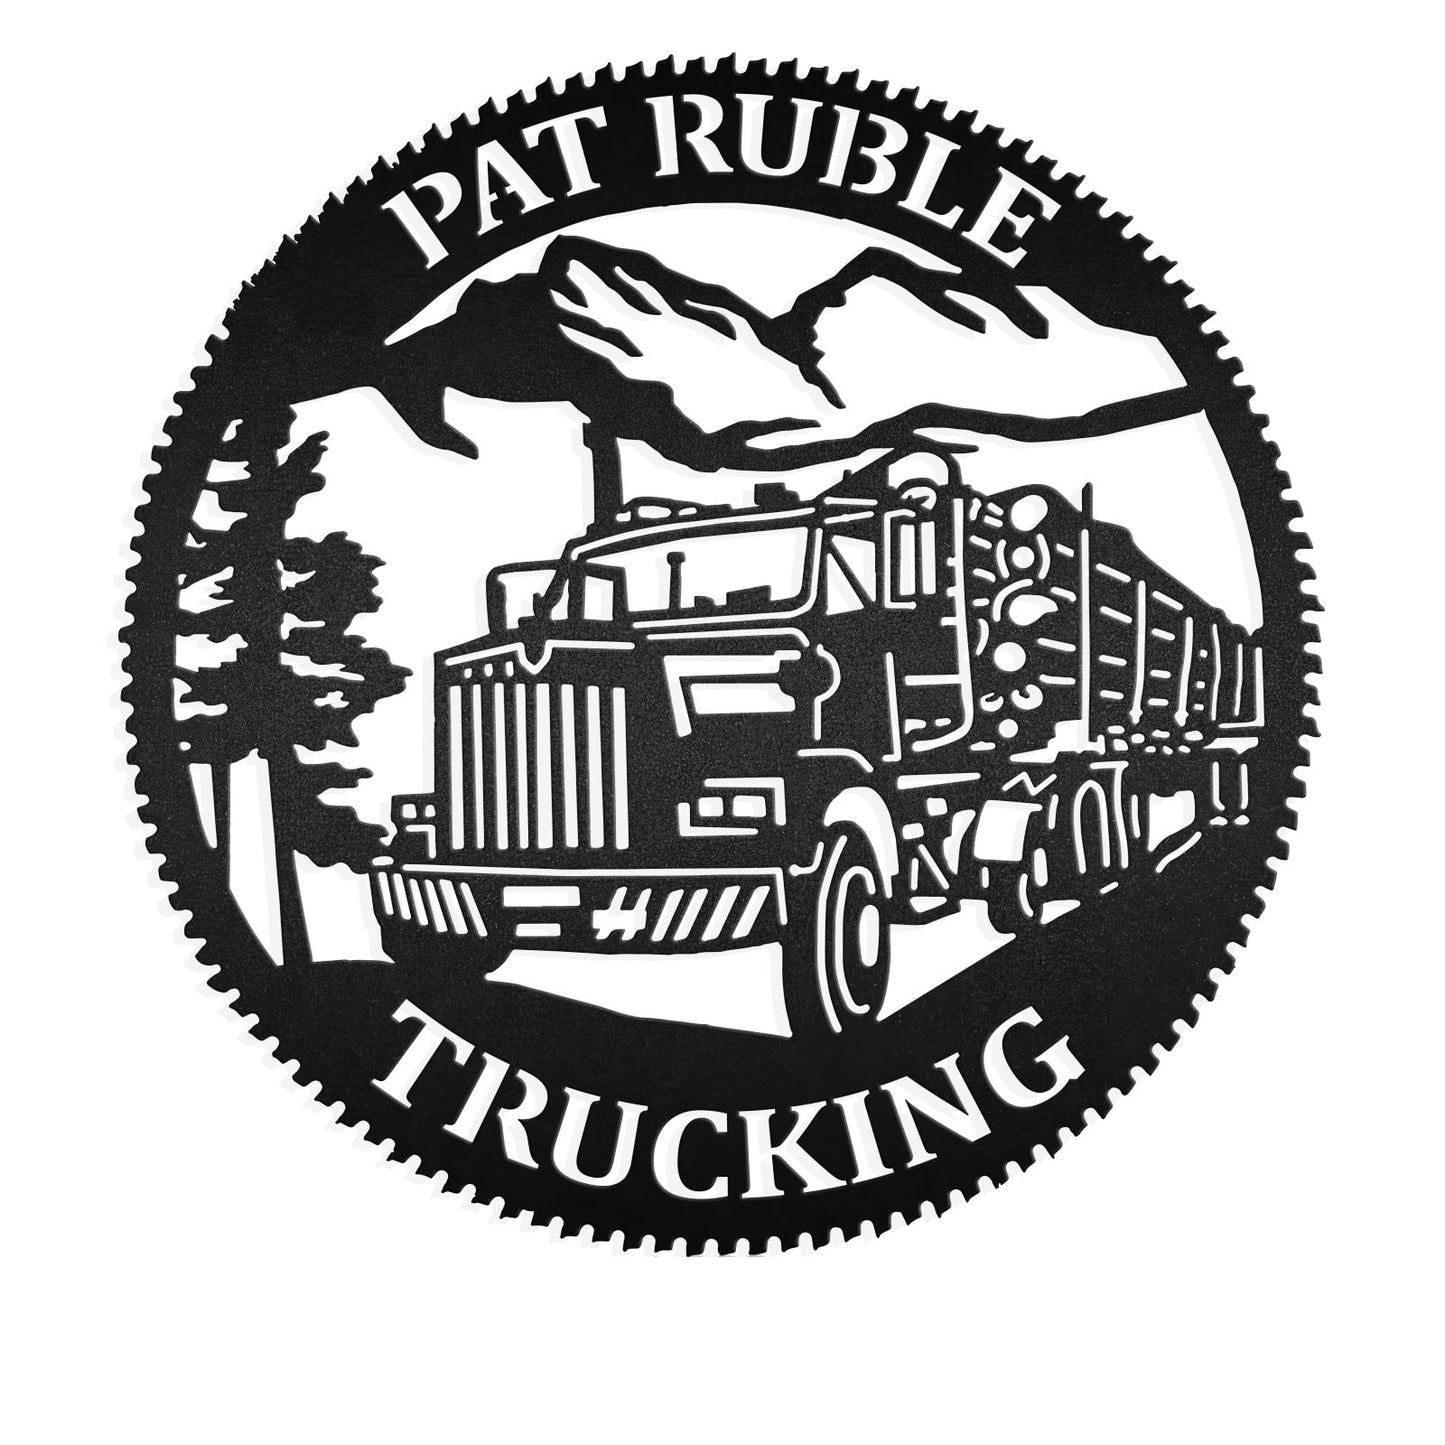 Custom Log Trucking Big Rig Vehicle Metal Sign - Metal Decor Wall Art - Heavy Equipment Operator Gifts